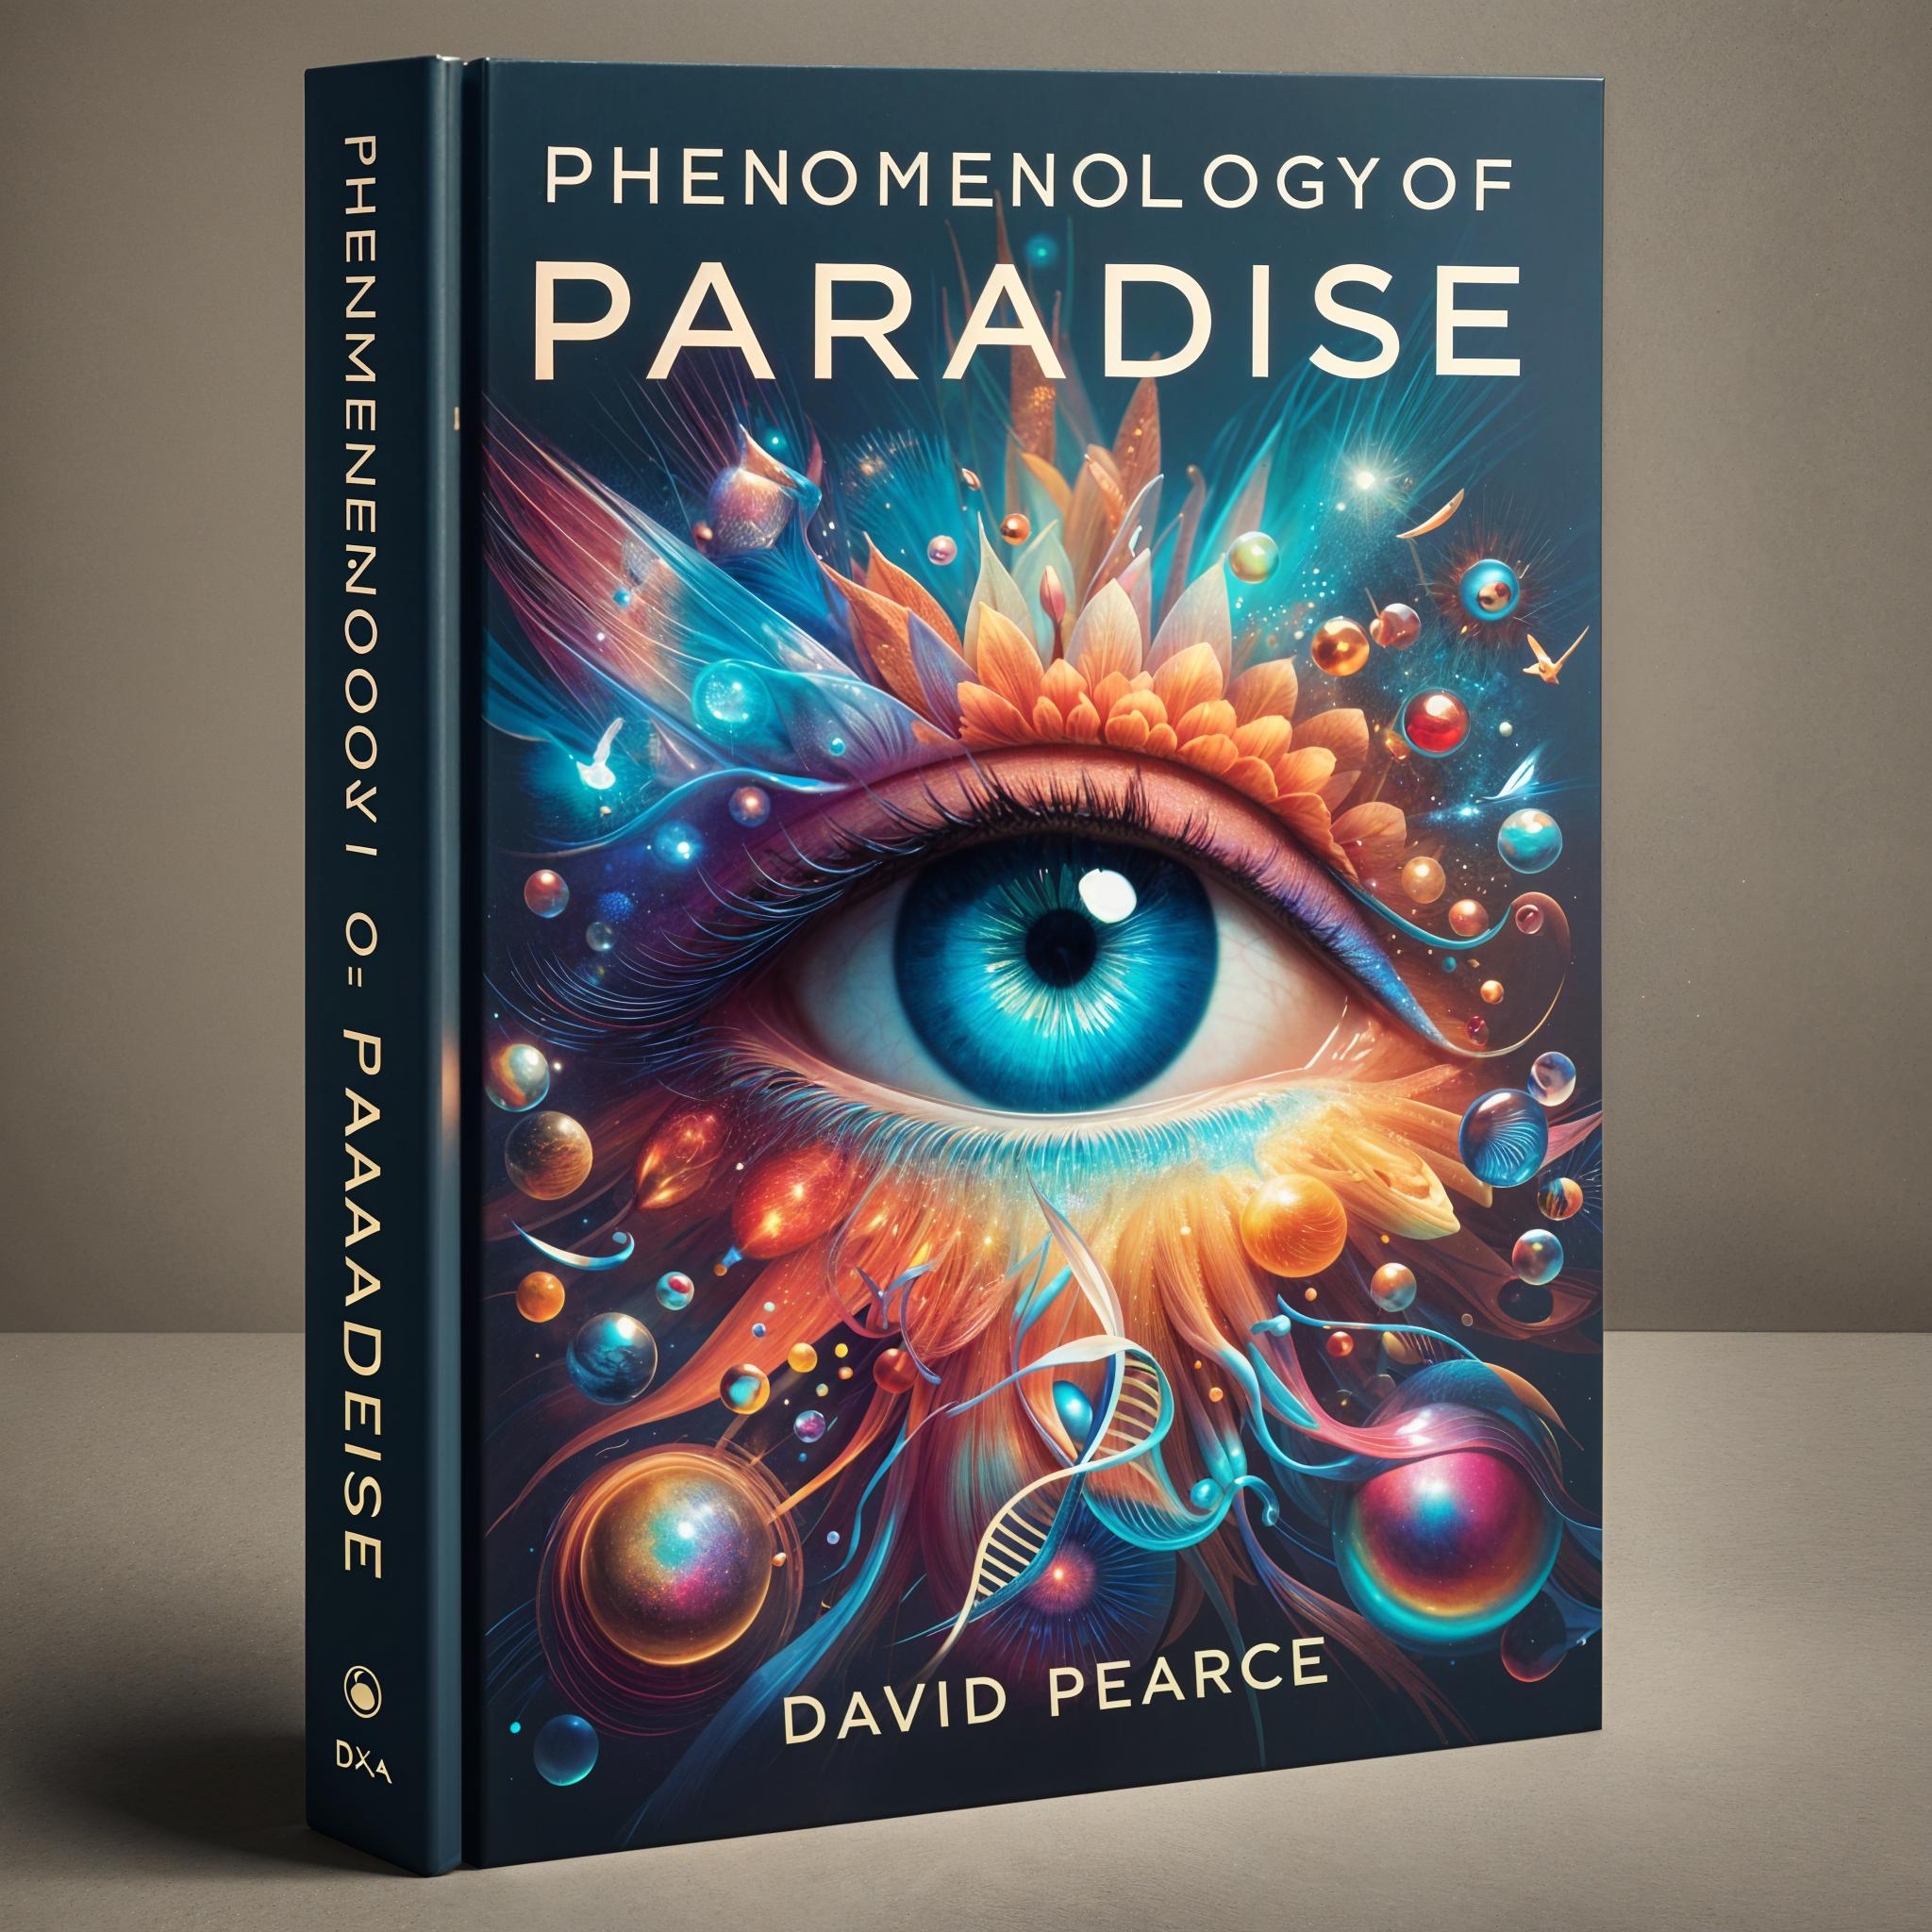 The Phenomenology of Paradise by David Pearce